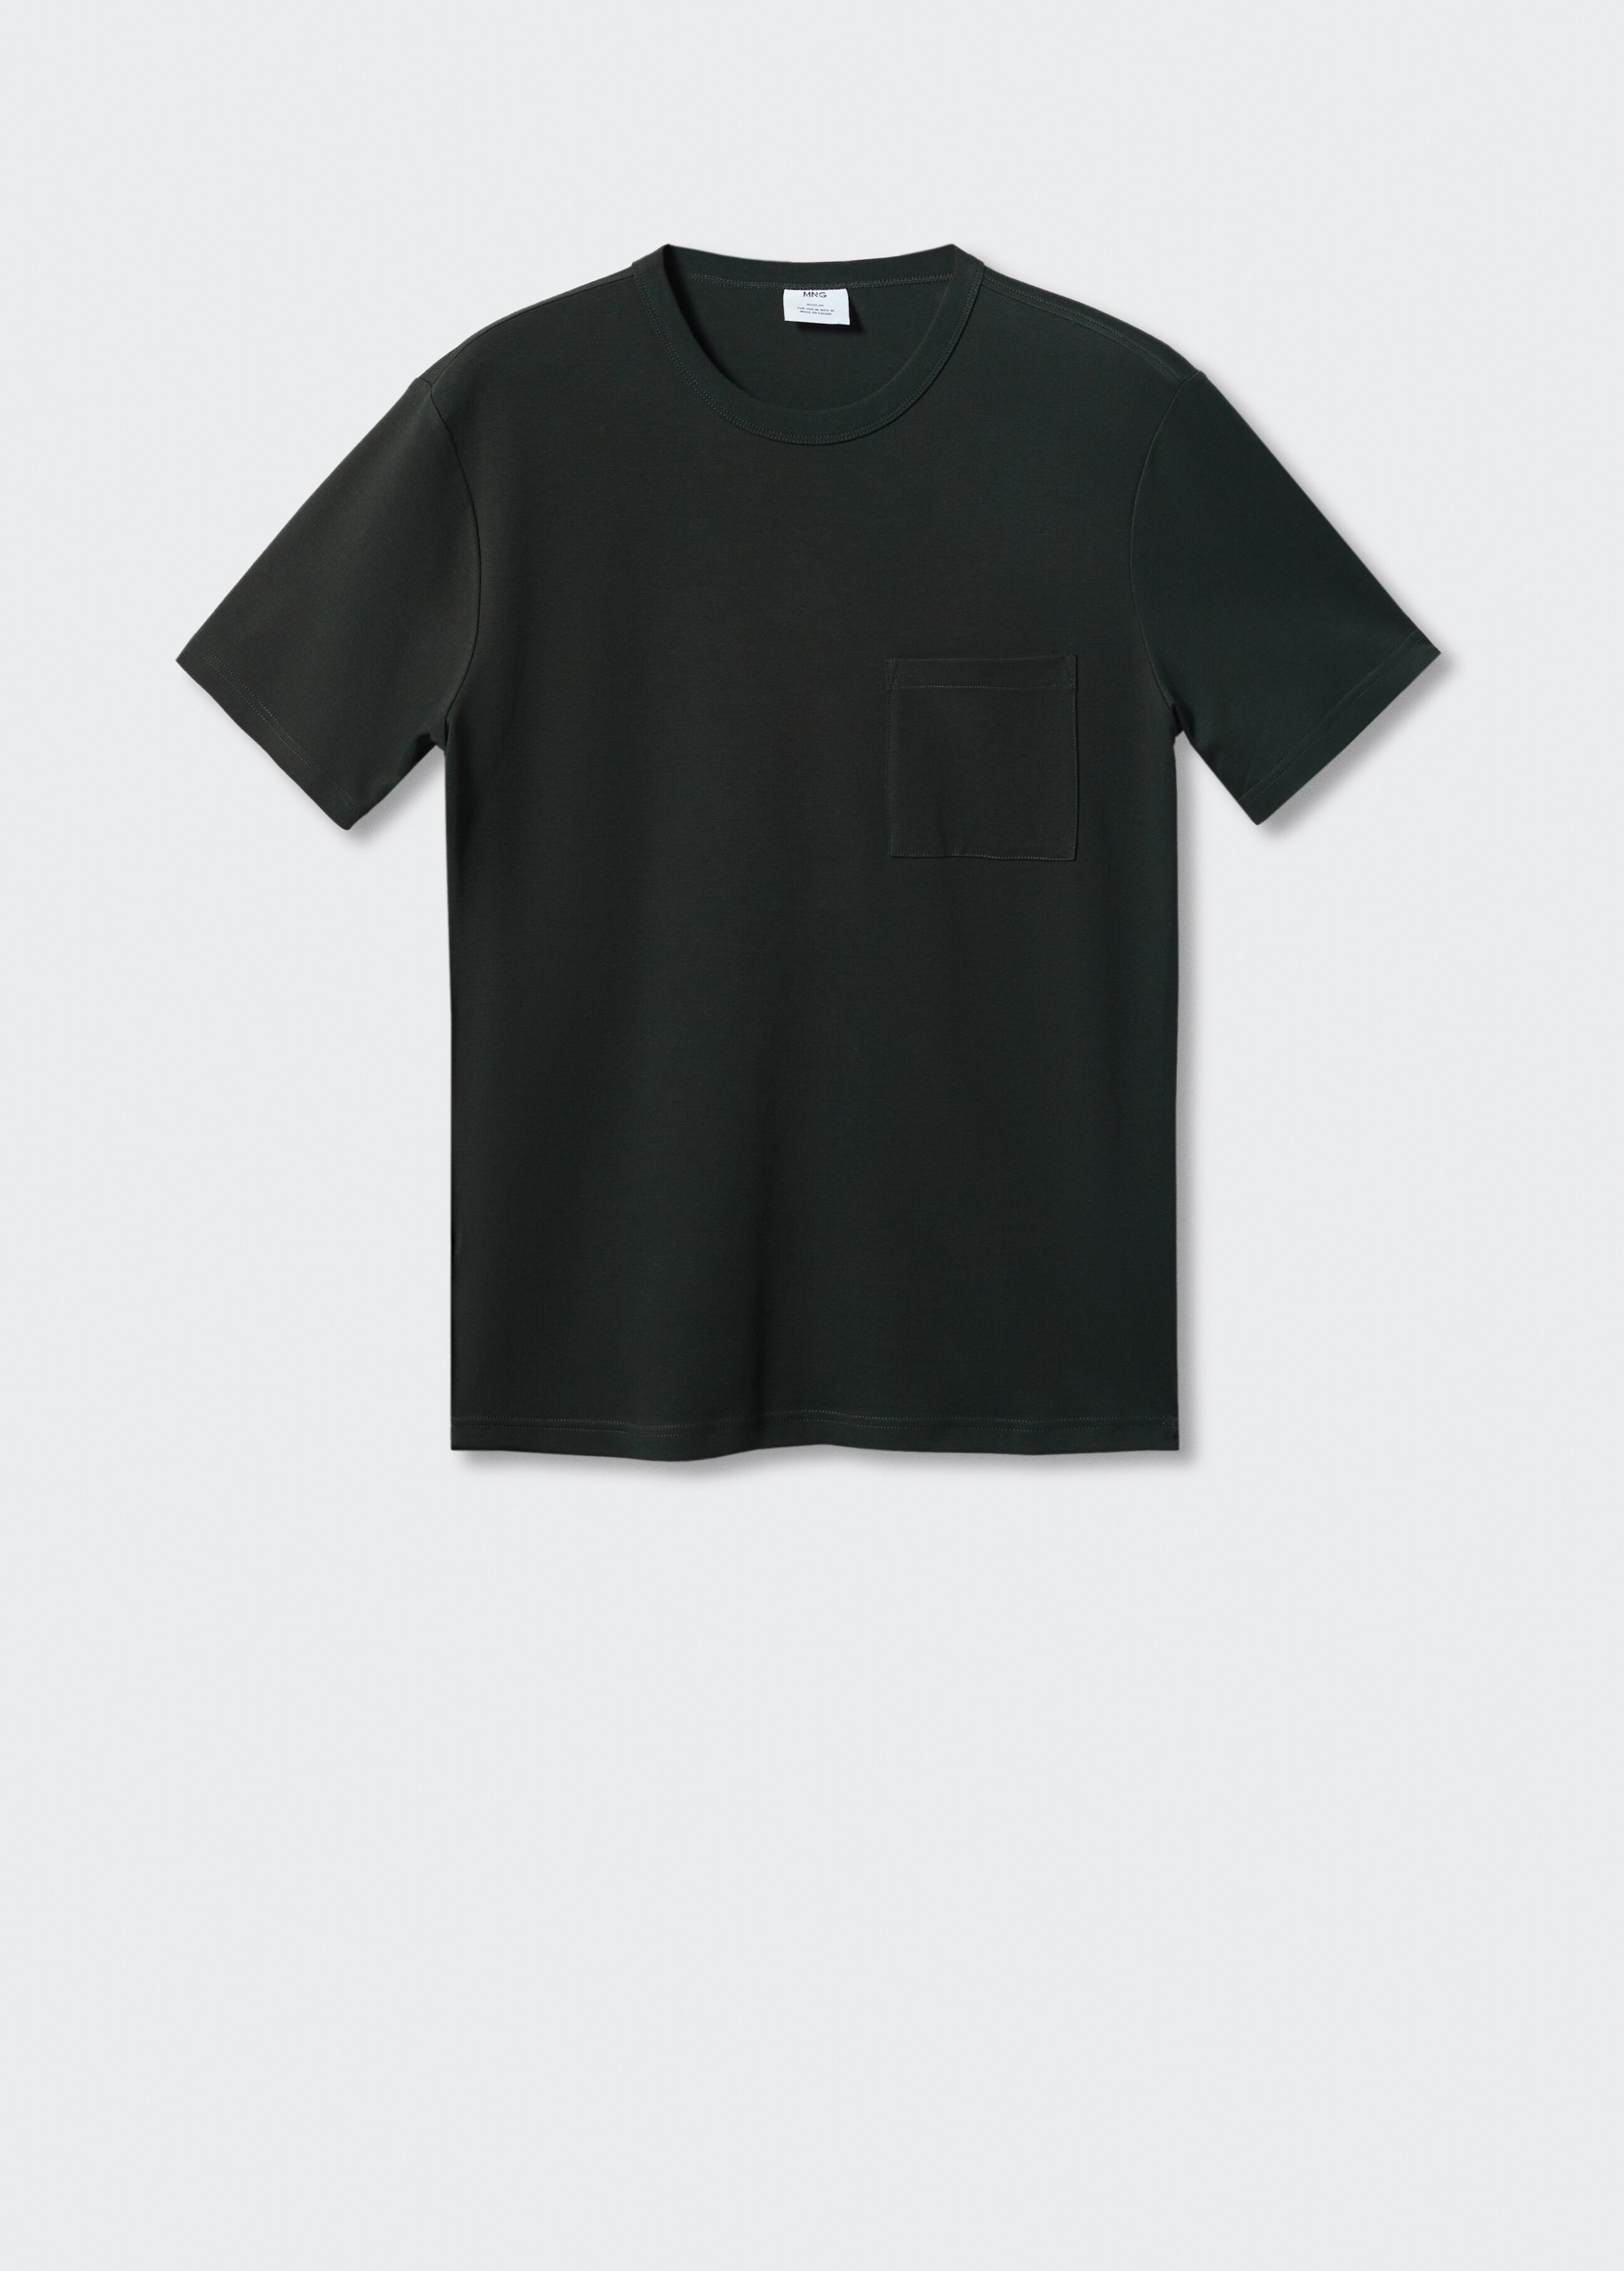 Camiseta bolsillo 100% algodón - Artículo sin modelo